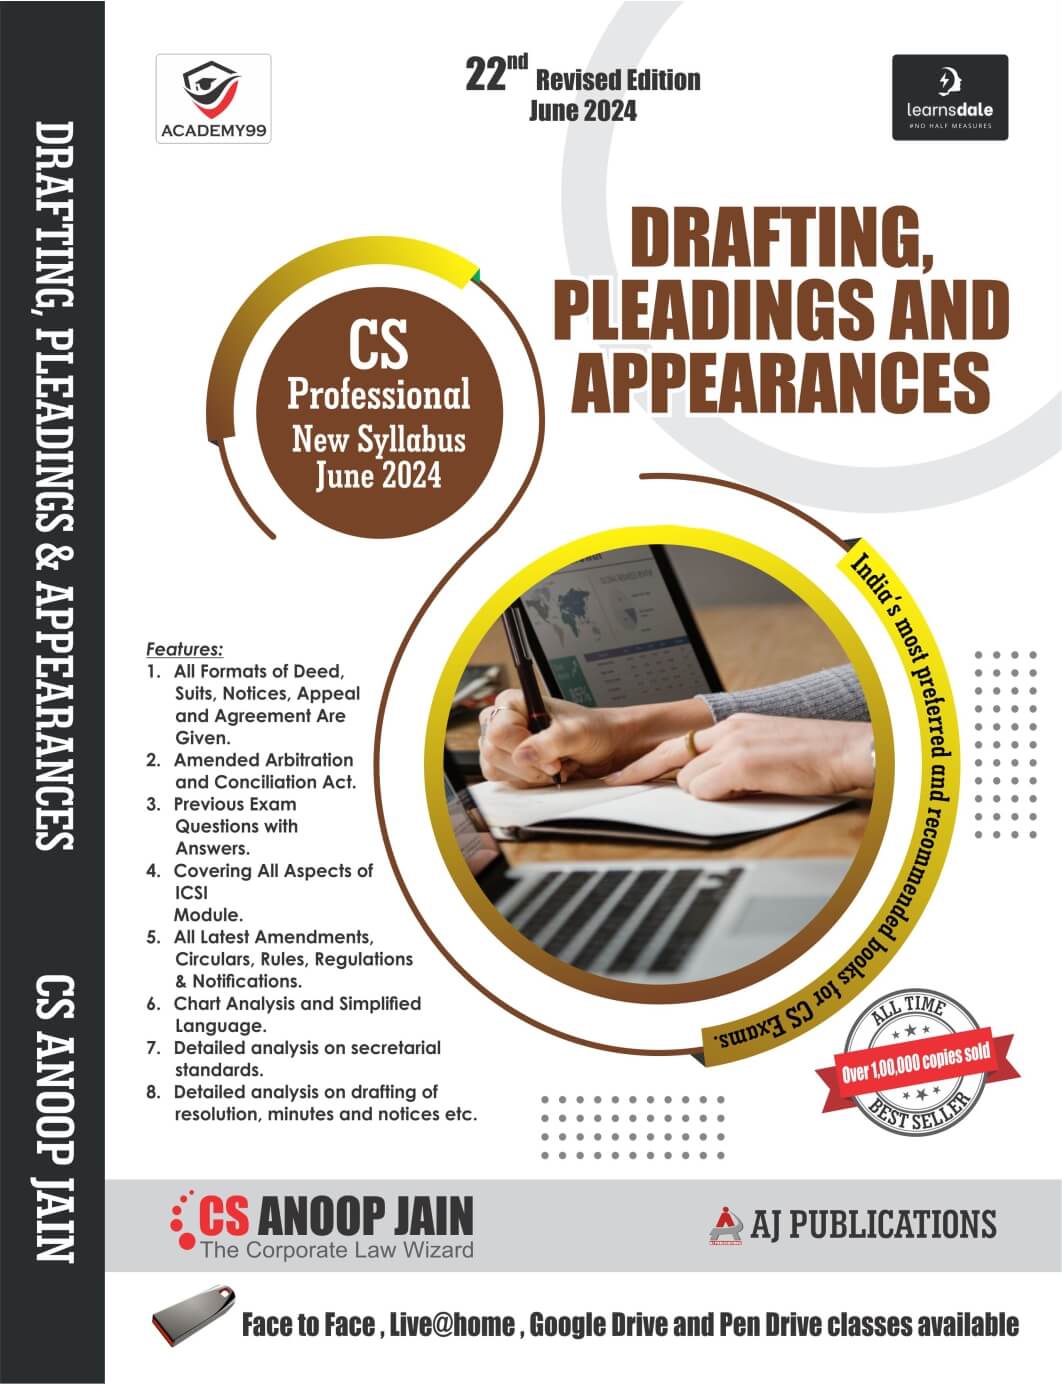 CS Professional New Syllabus Drafting Pleadings and Appearances Book by CS Anoop Jain